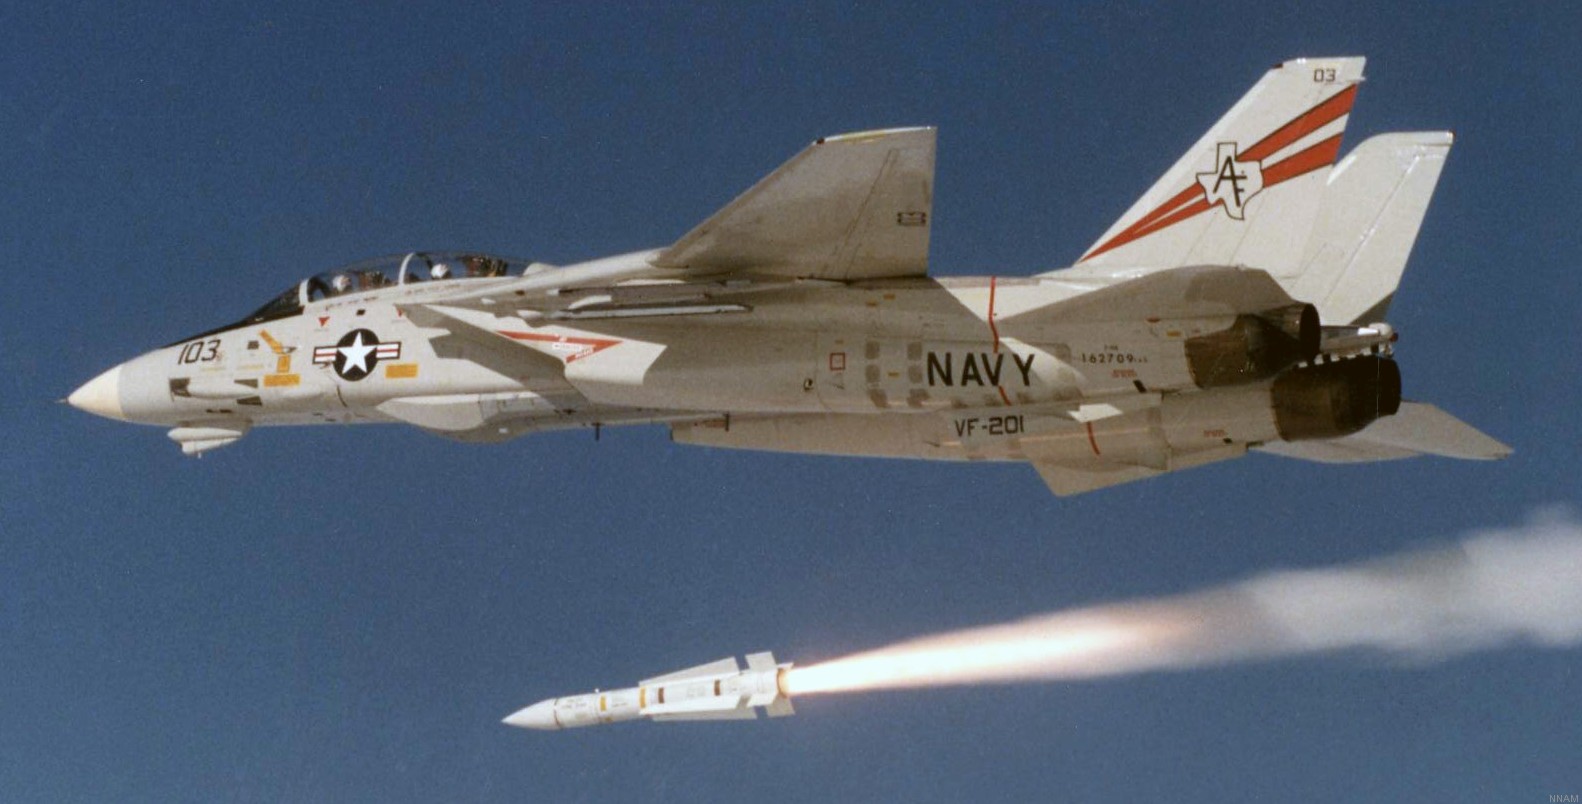 vfa-201 hunters fighter squadron us navy reserve f-14a tomcat 02 aim-54 phoenix sam missile